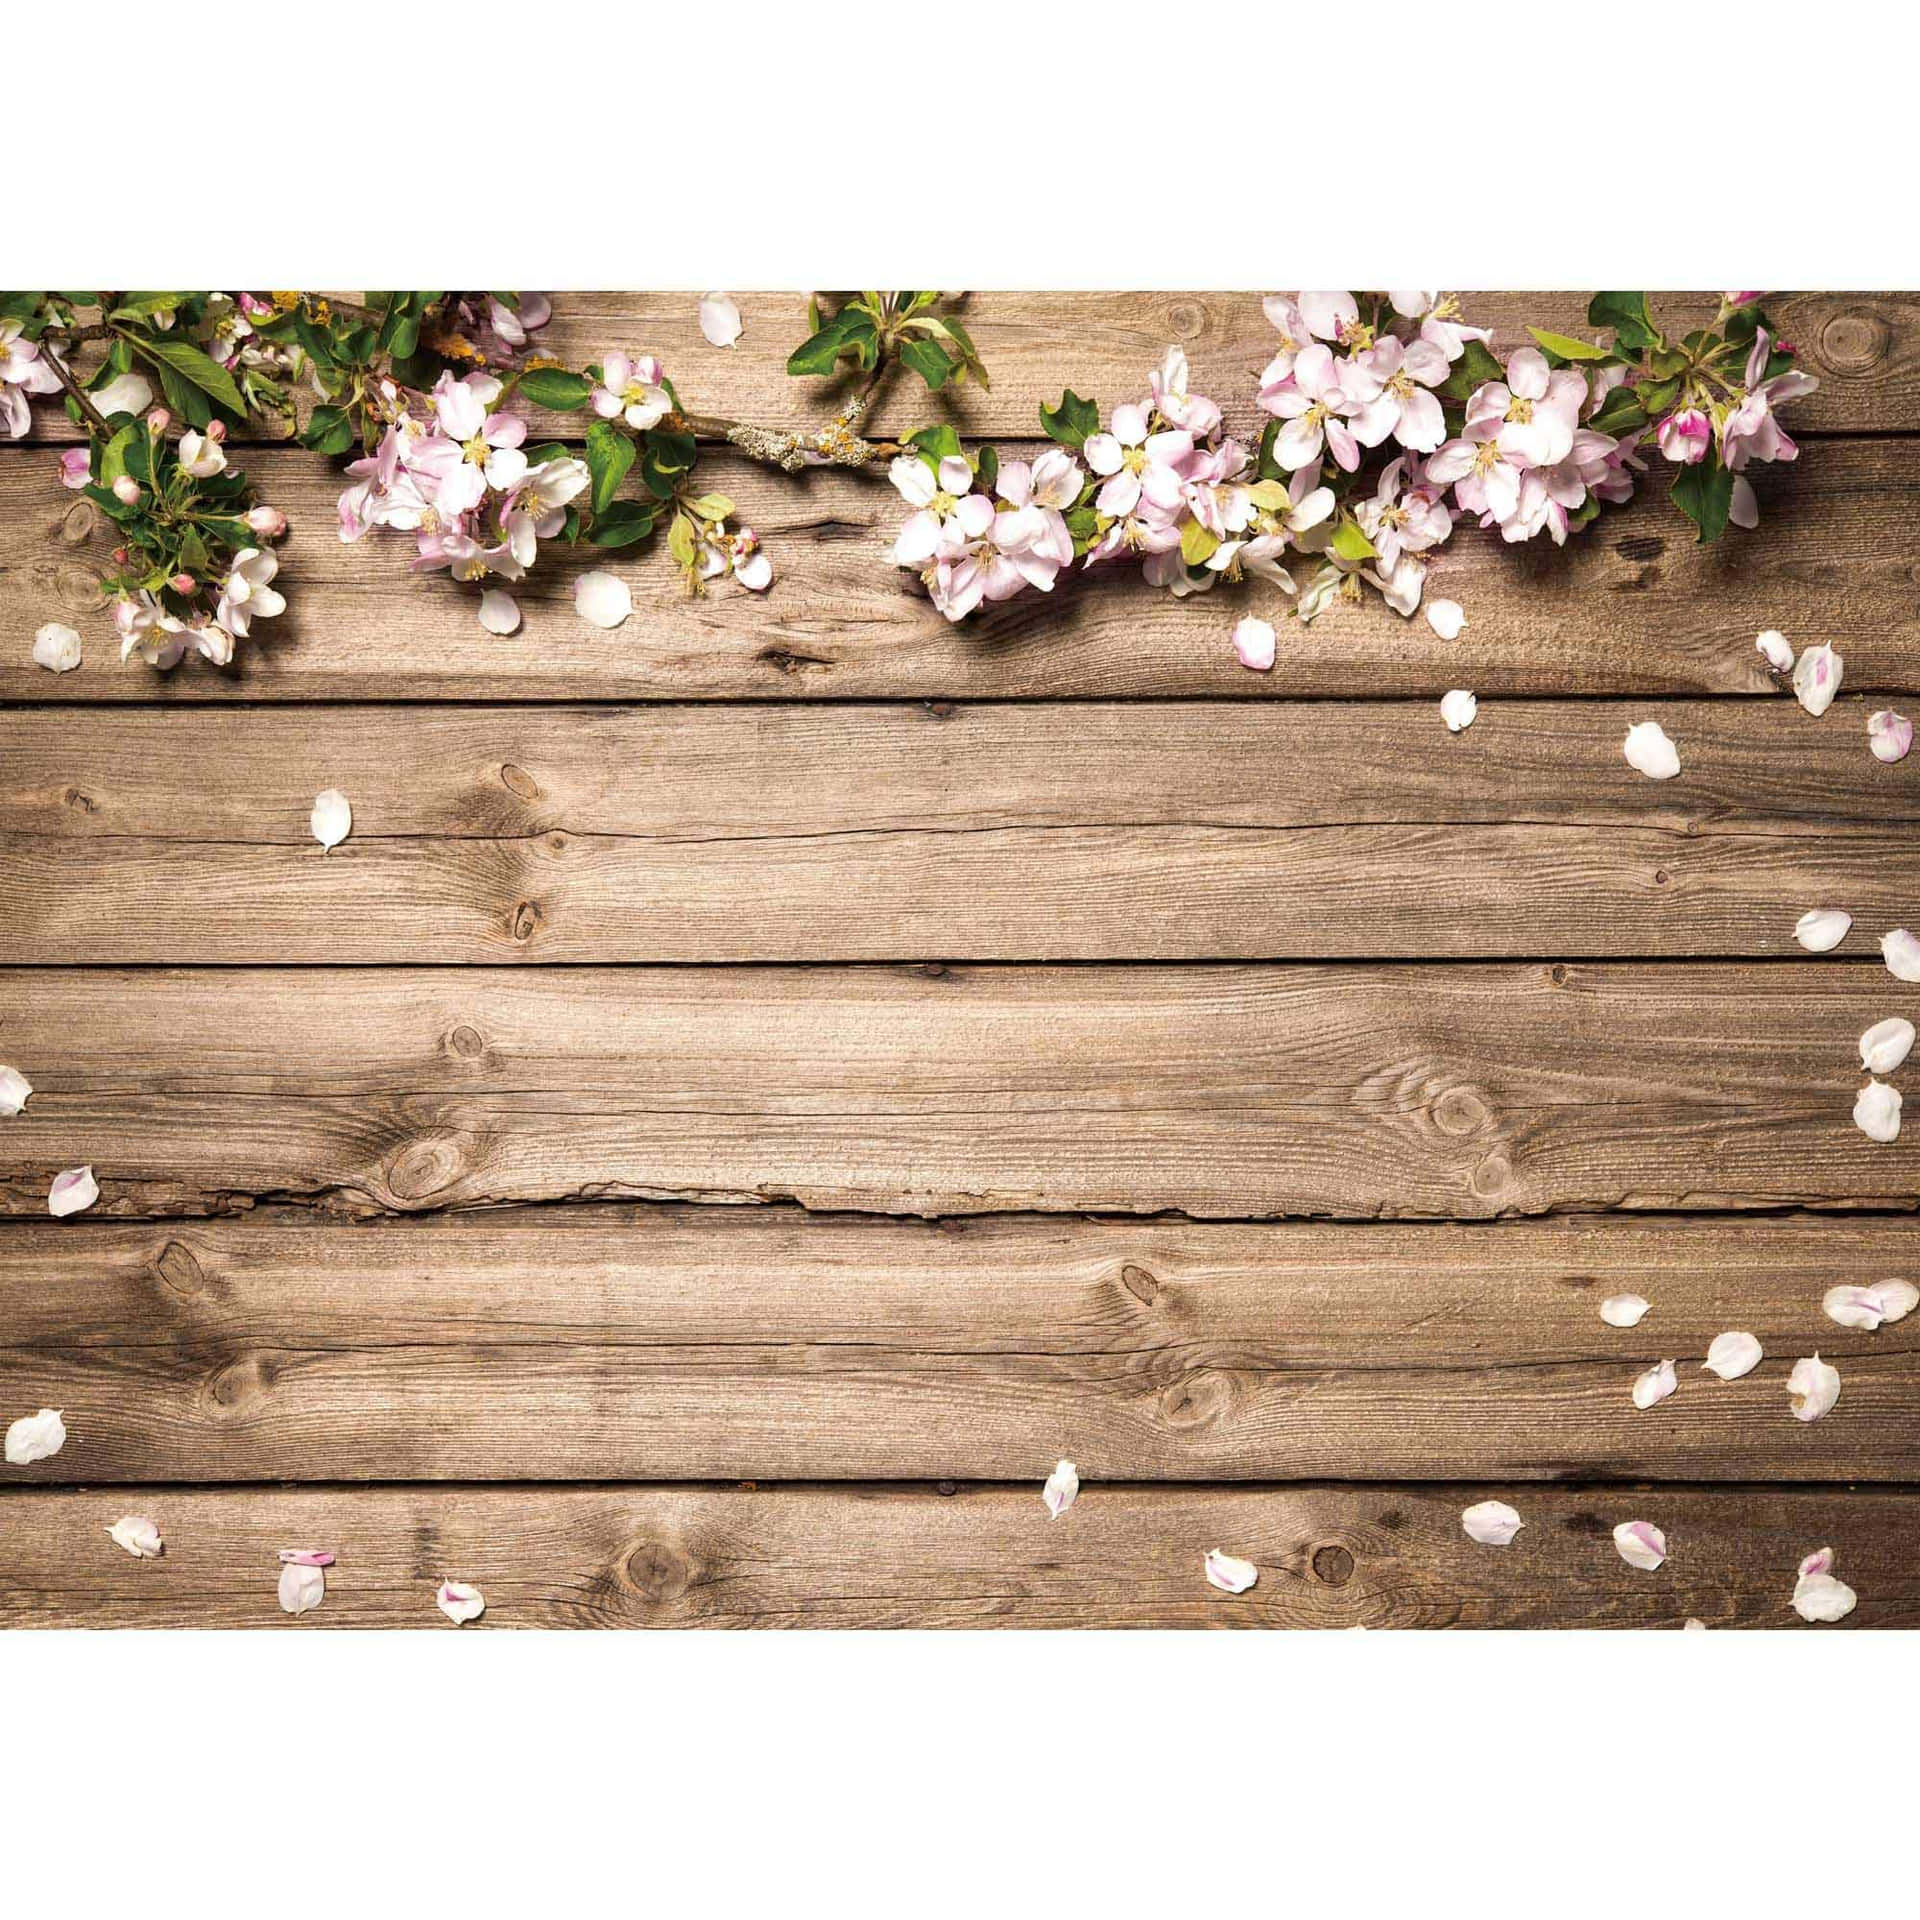 Wooden Backdrop Cherry Blossom Petals Spring Flower Background